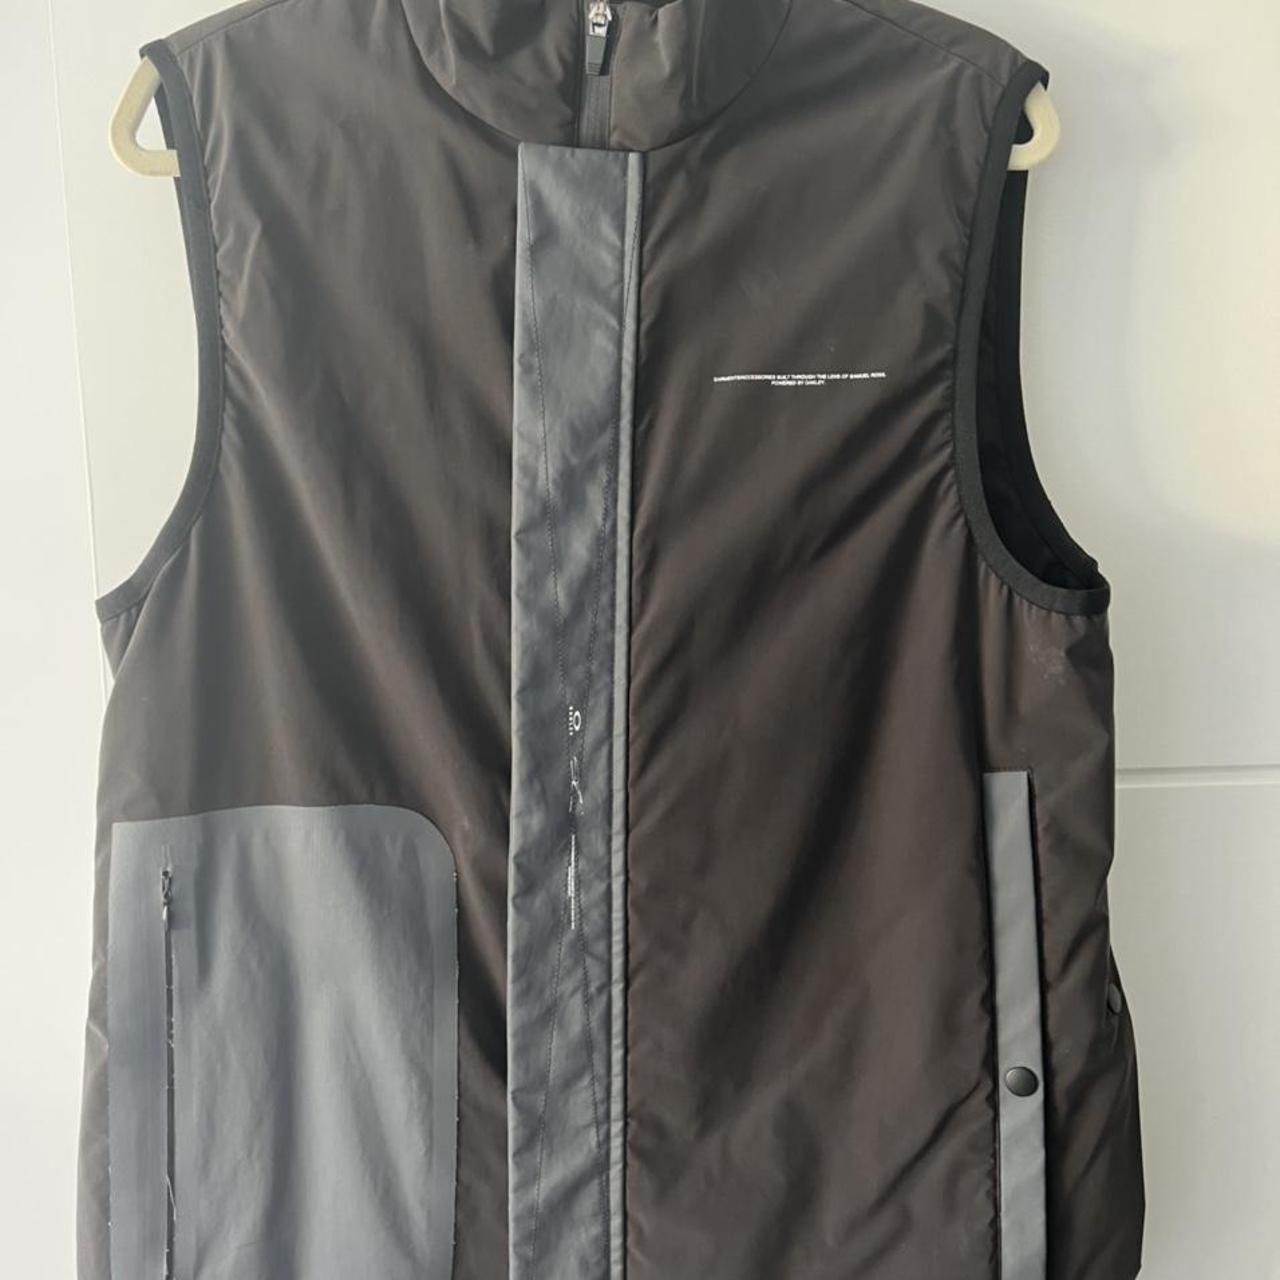 A Cold Wall (Samuel Ross X Oakley) Vest only worn... - Depop